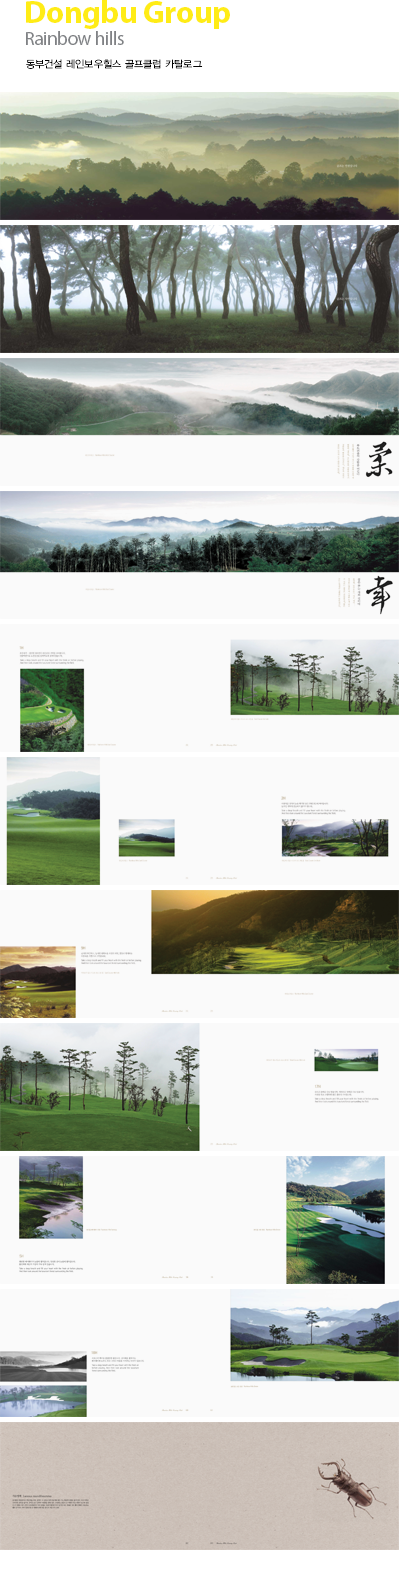 Dongbu Group Rainbow hills 동부건설 레인보우힐스 골프클럽 카탈로그